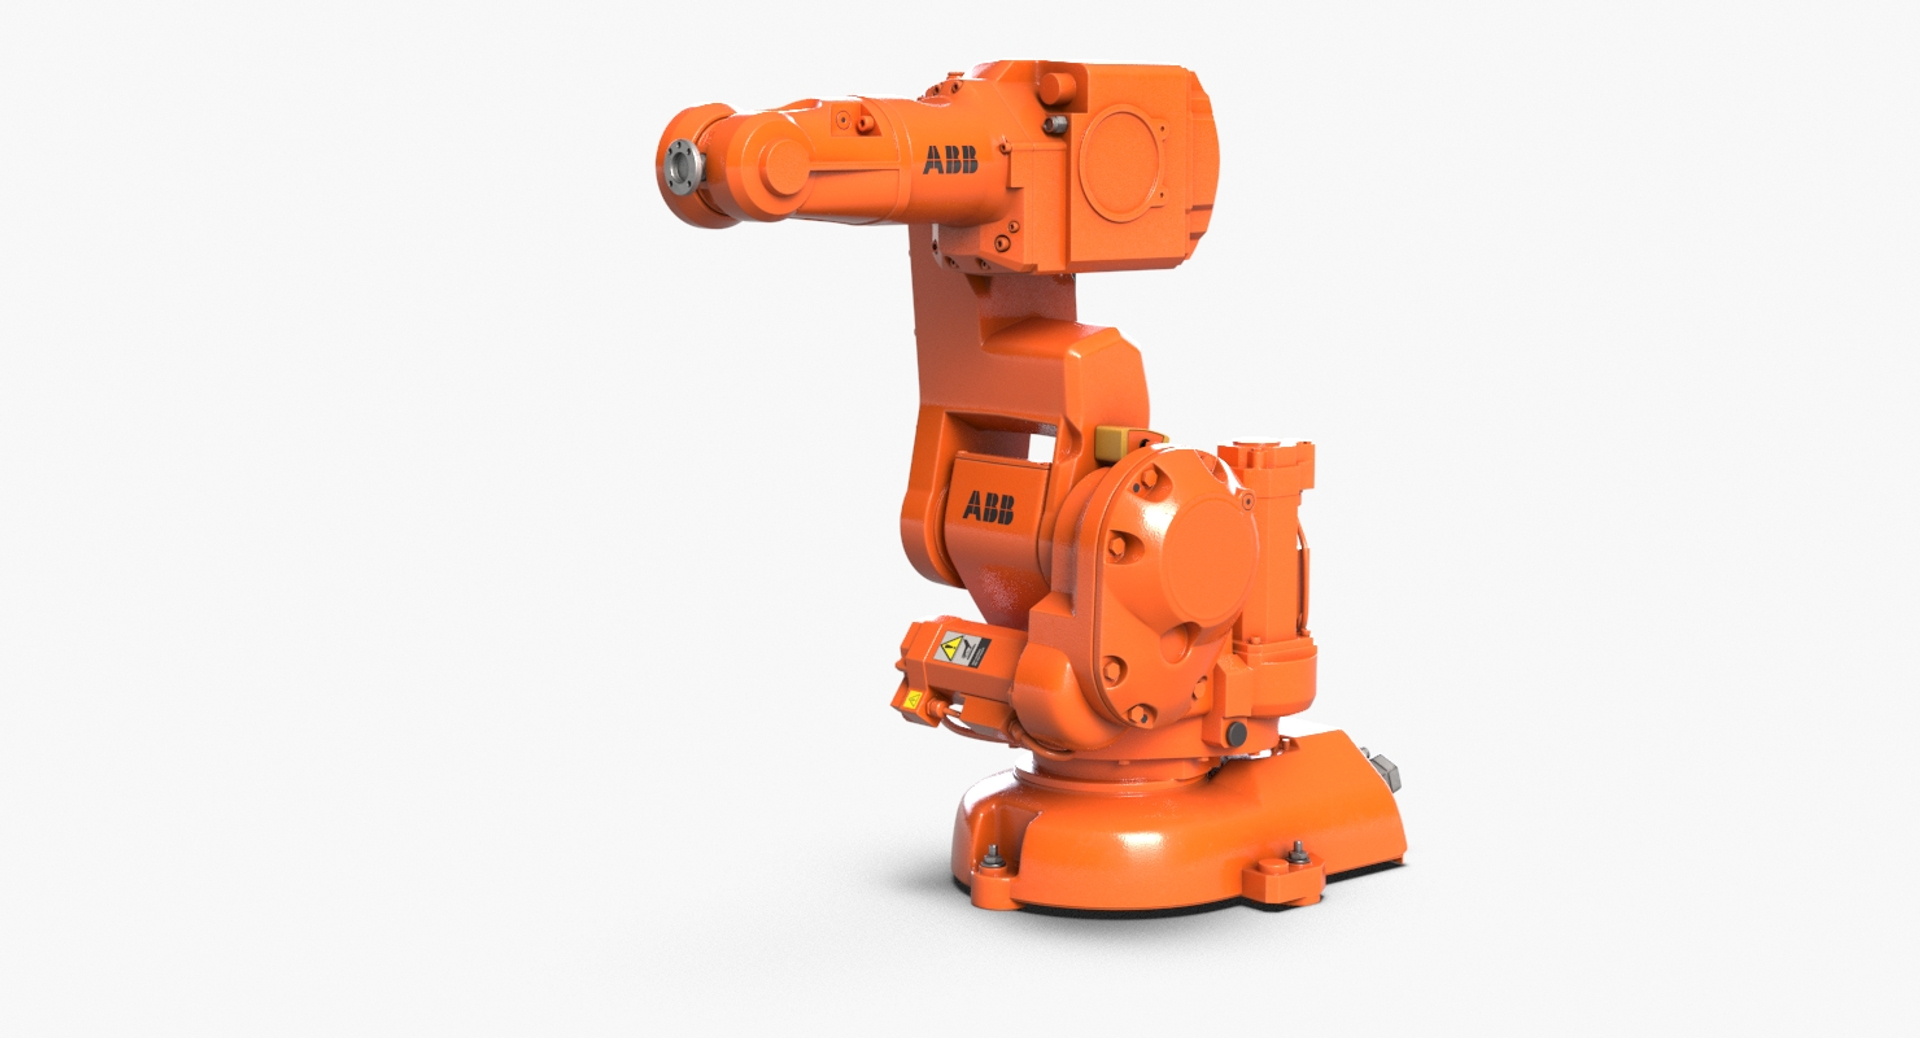 3D industrial robot arm abb https://p.turbosquid.com/ts-thumb/ch/Juy4VB/qgPyqEY6/abbrobotarmirb140/jpg/1557964073/1920x1080/turn_fit_q99/354e4ad8dea197374b56878ad4a4f6eadcbce519/abbrobotarmirb140-1.jpg